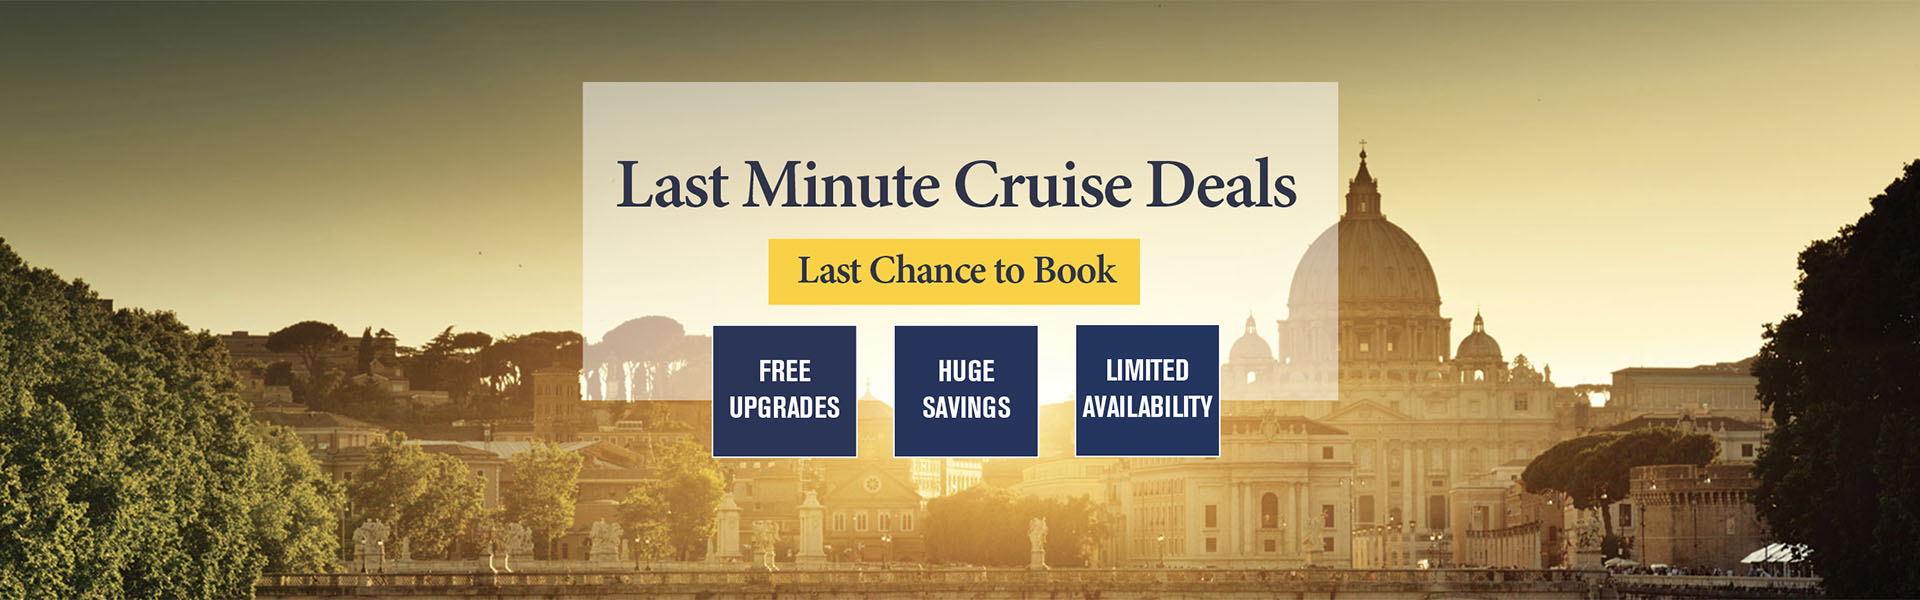 Last Minute Cruise Deals